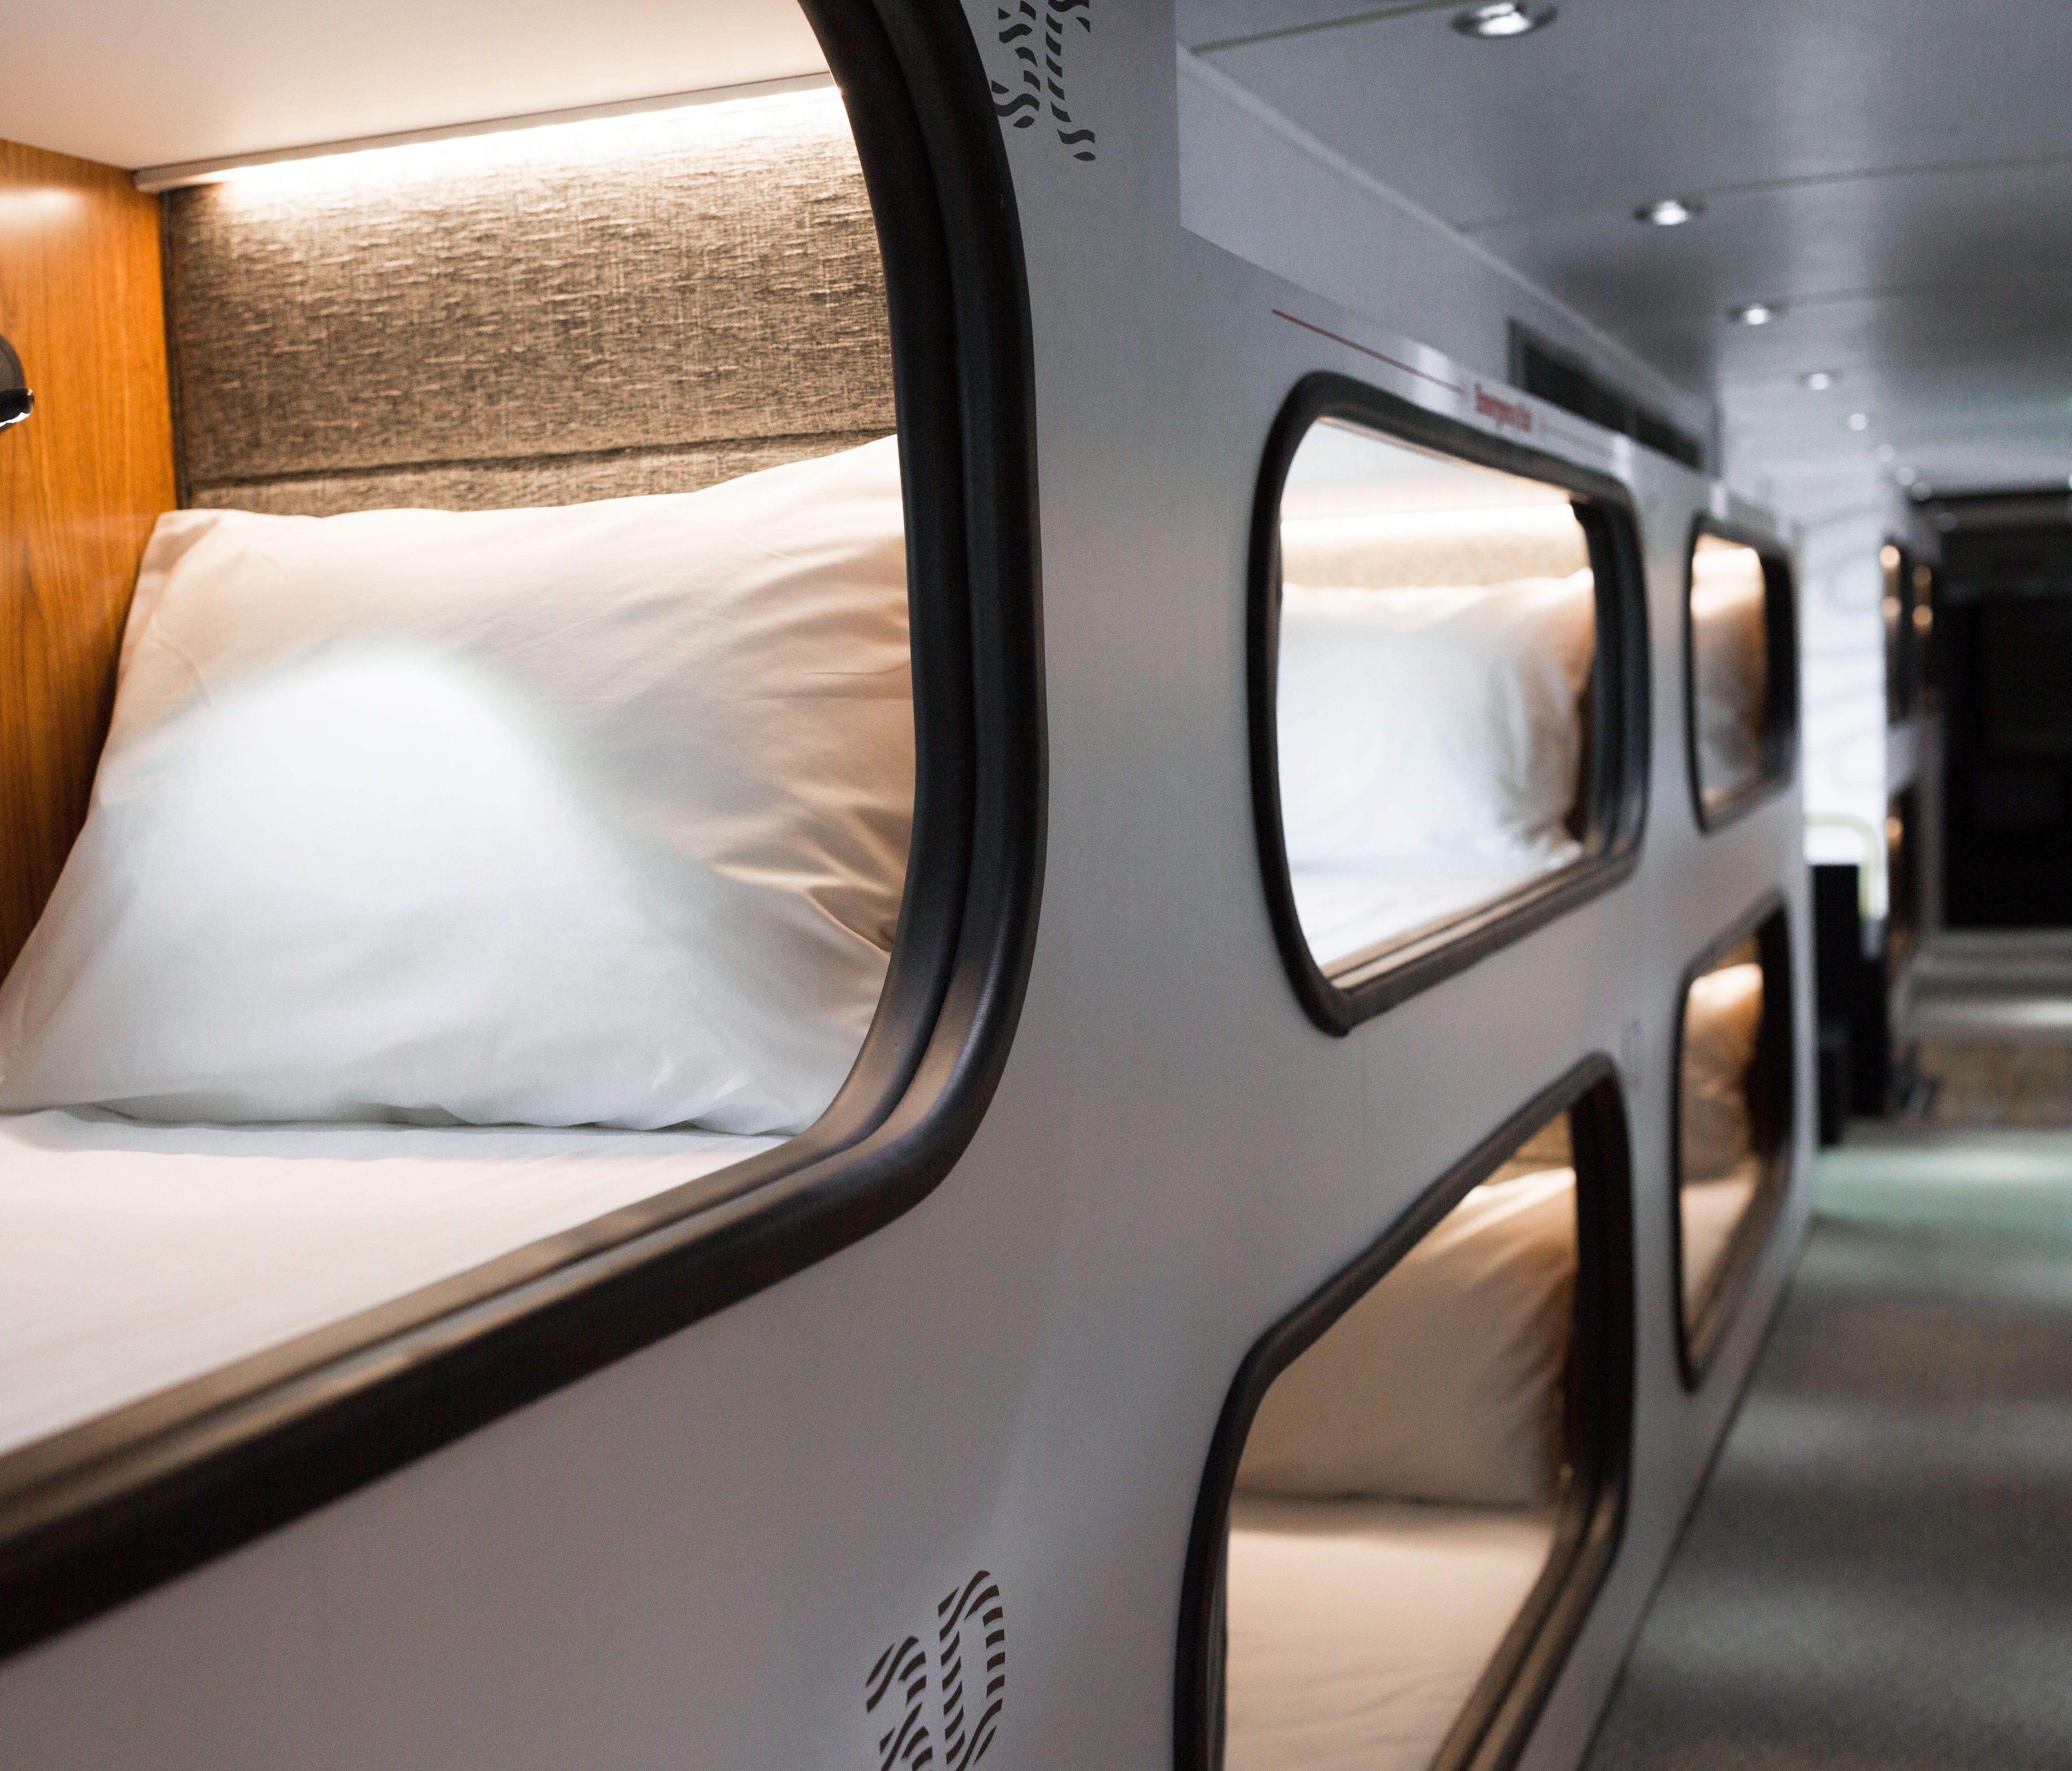 Cabin passengers each get a private sleeping pod.